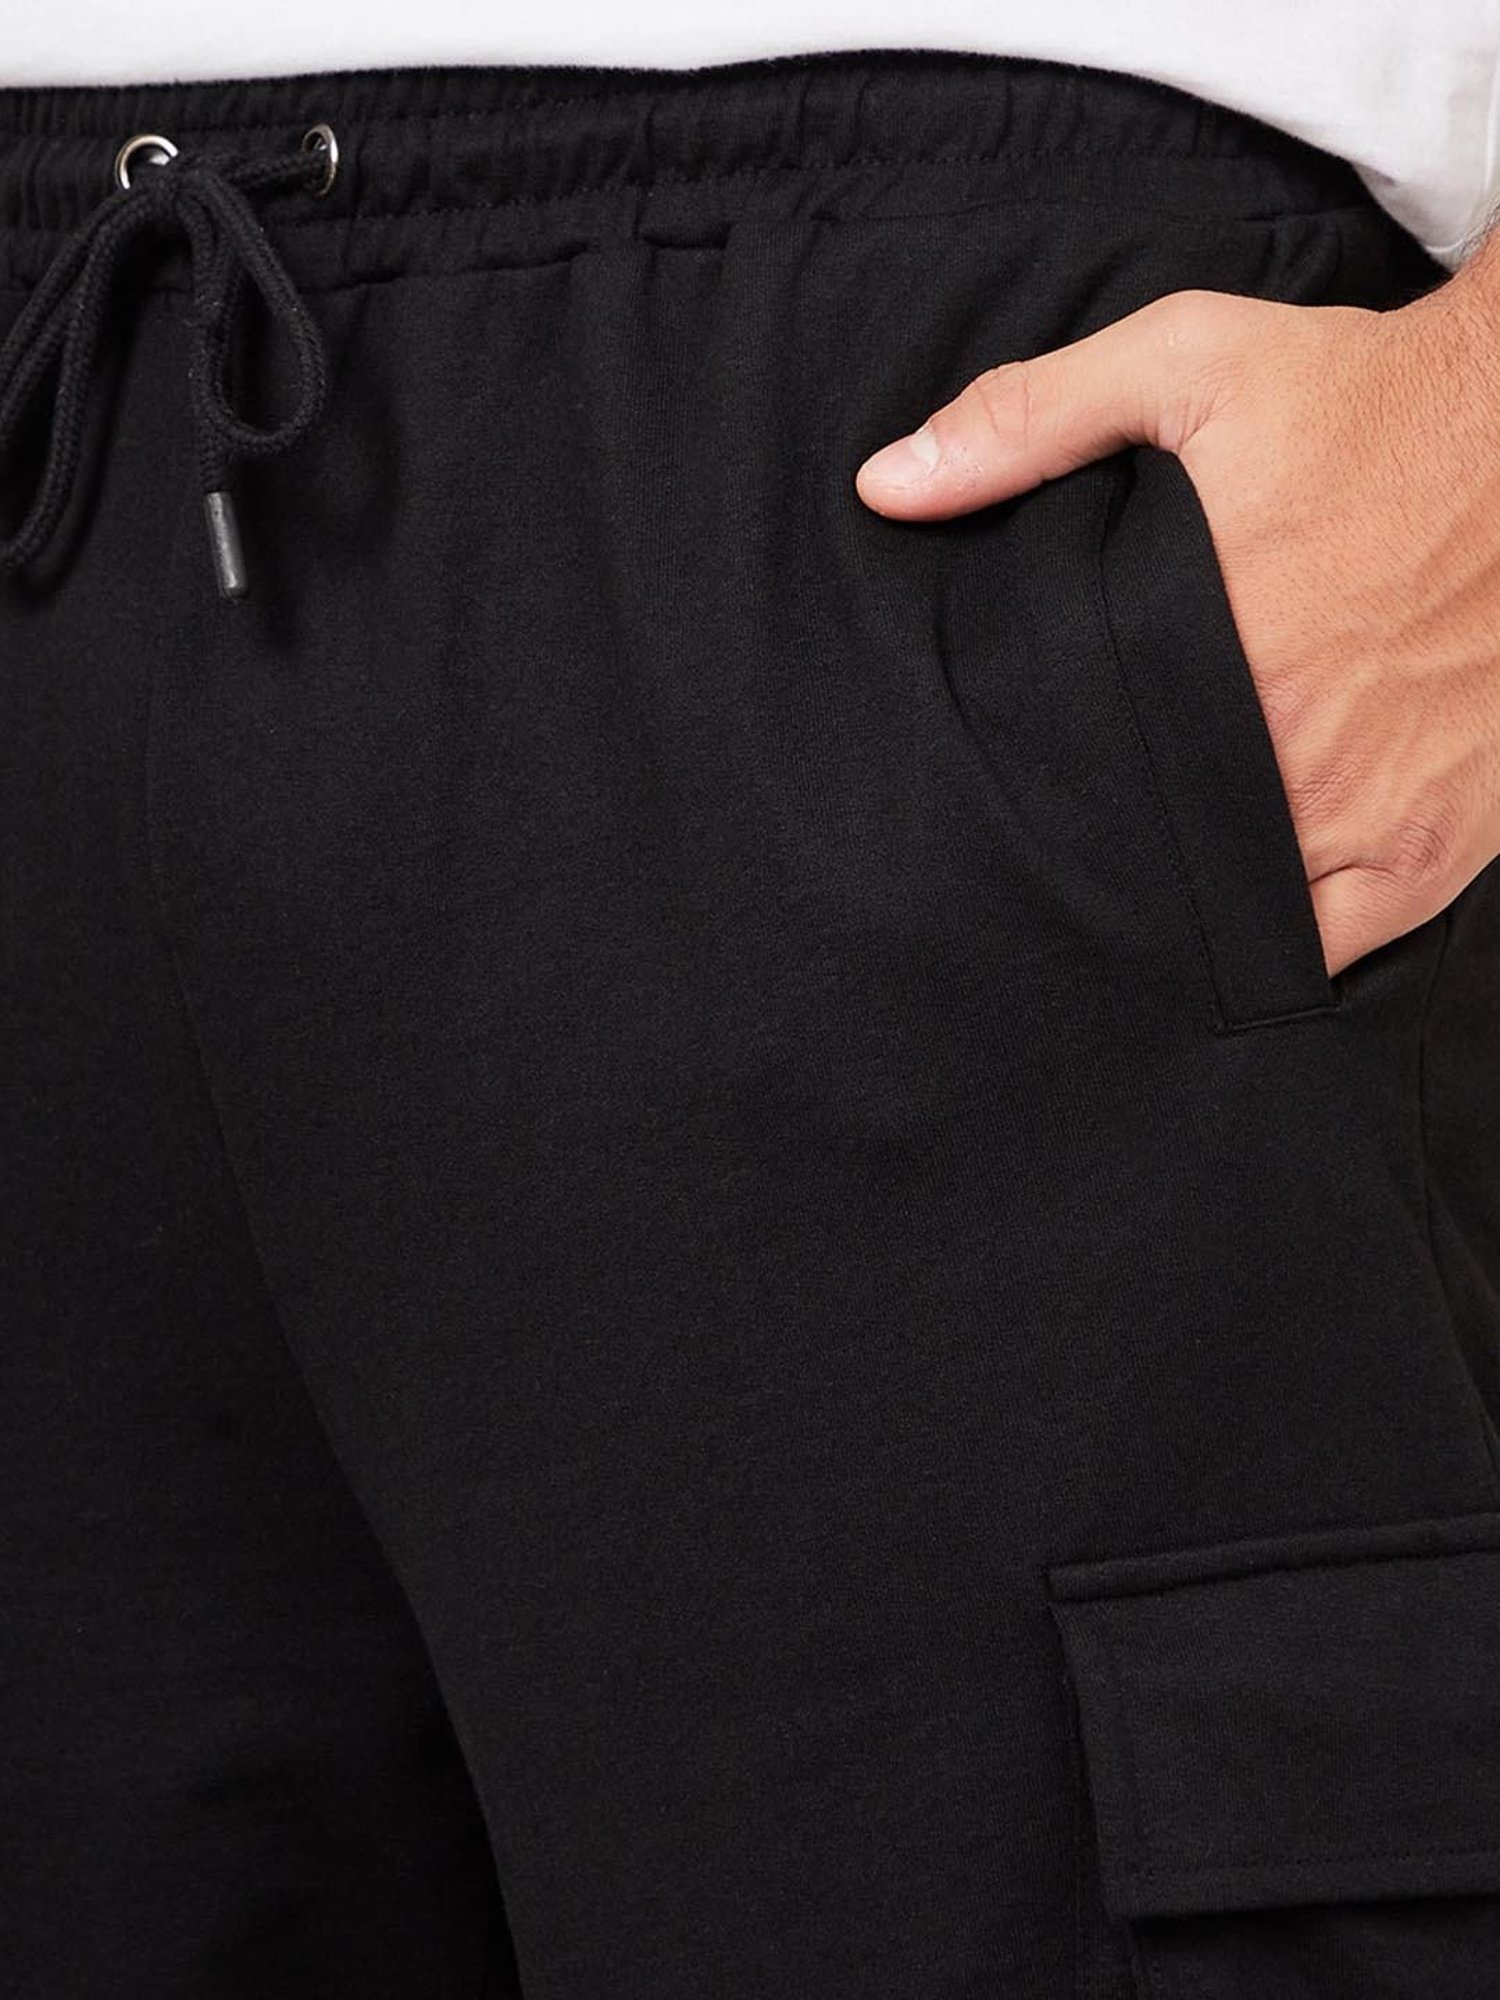 Buy Styli Black Cotton Cargo Pants for Women Online @ Tata CLiQ